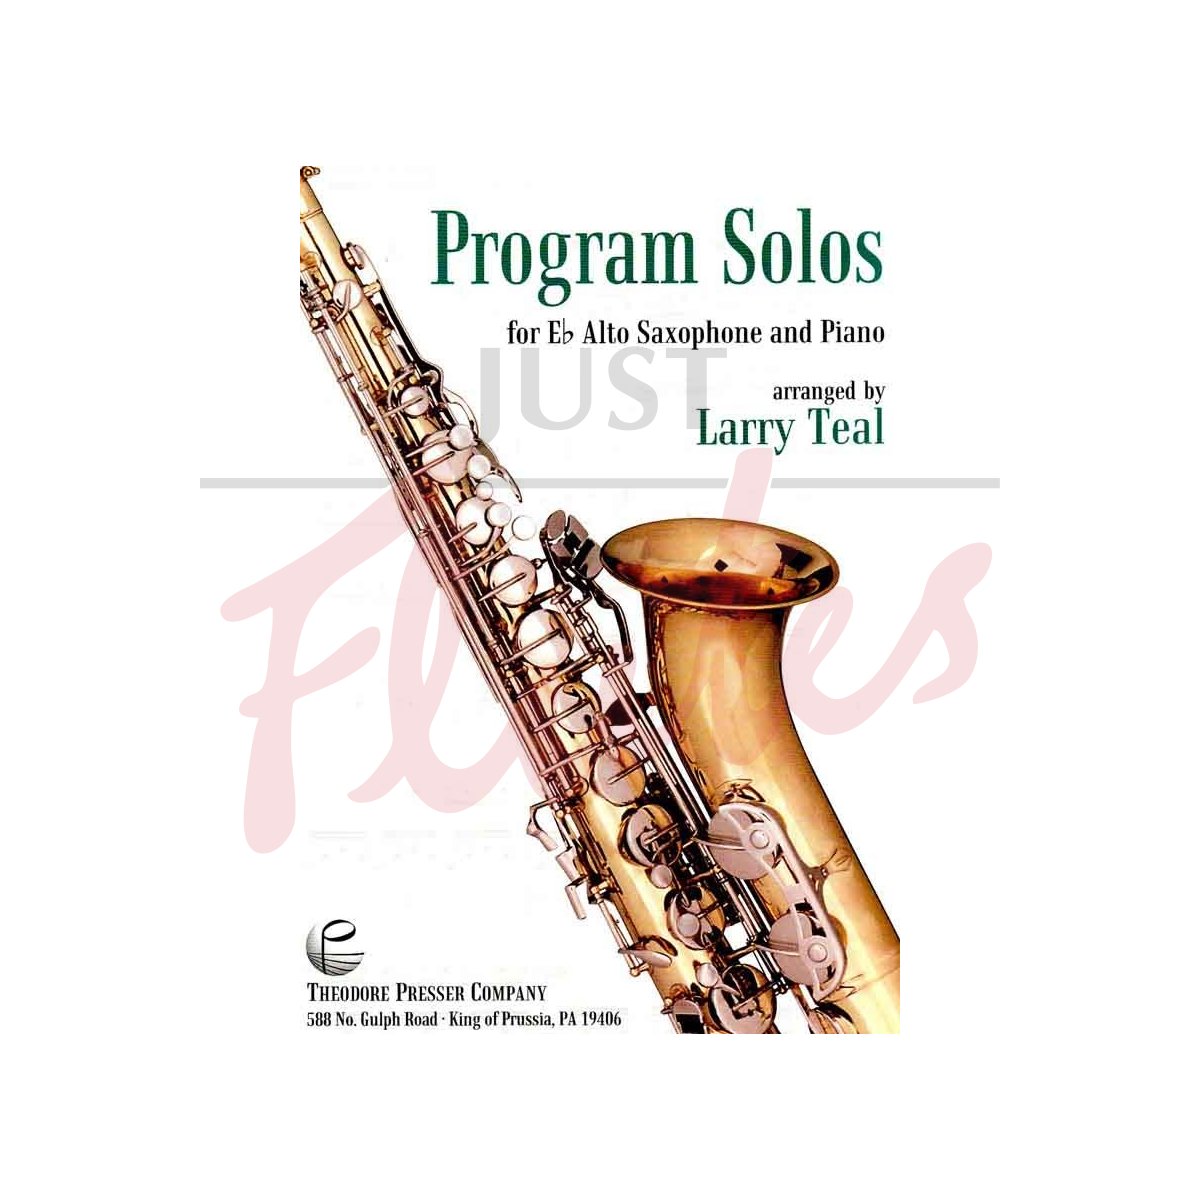 Program Solos for Eb Alto Saxophone